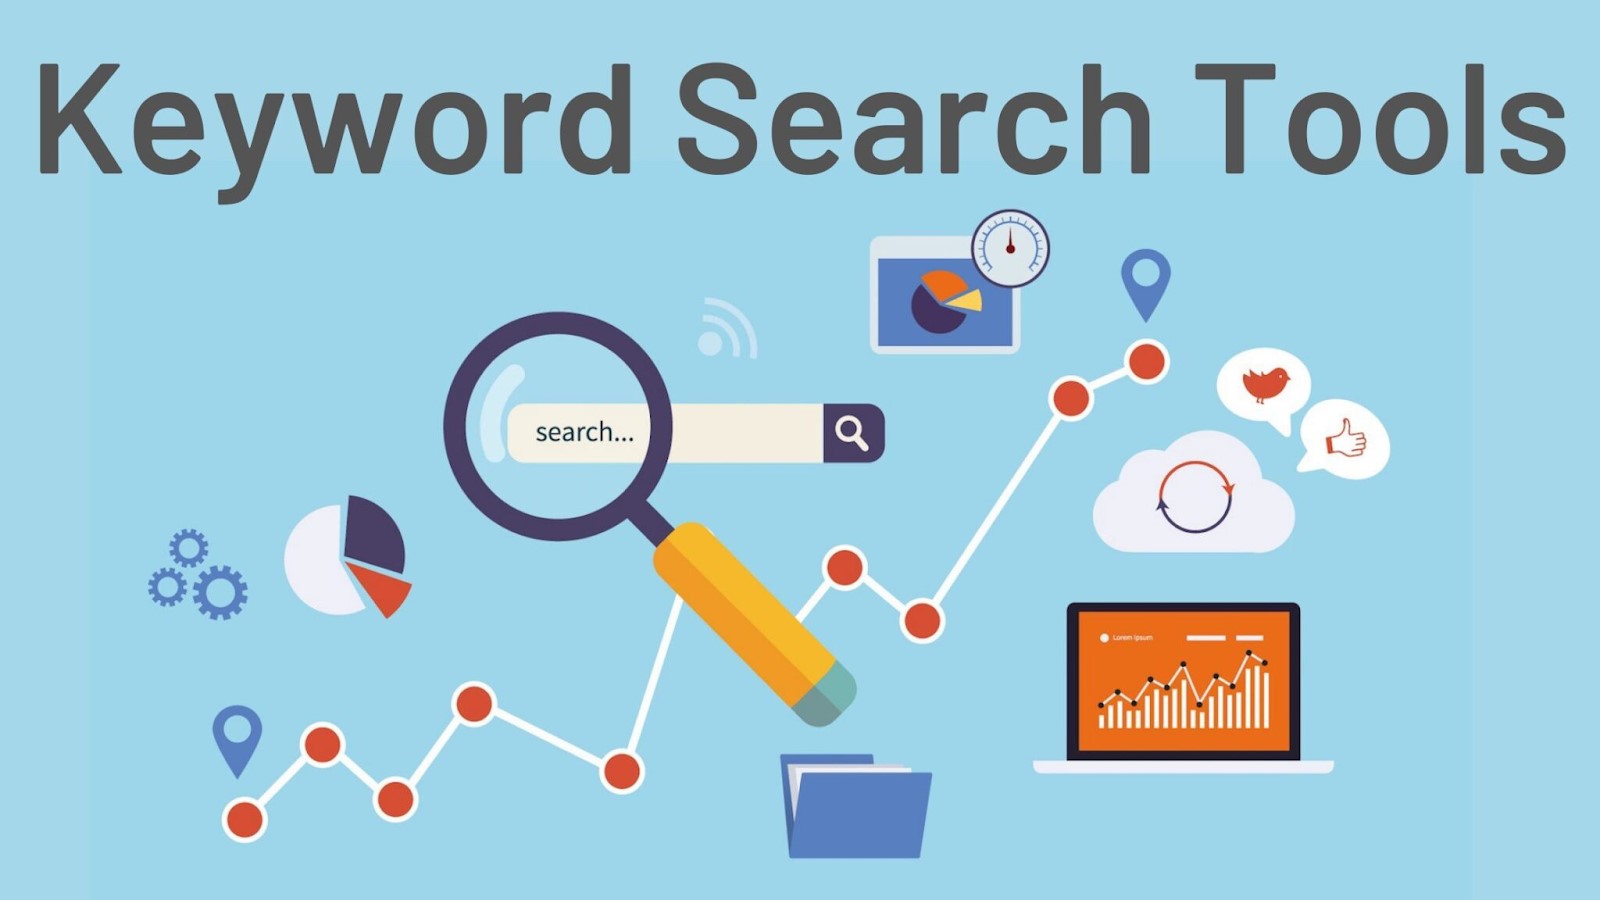 Keyword Search Tools image 1